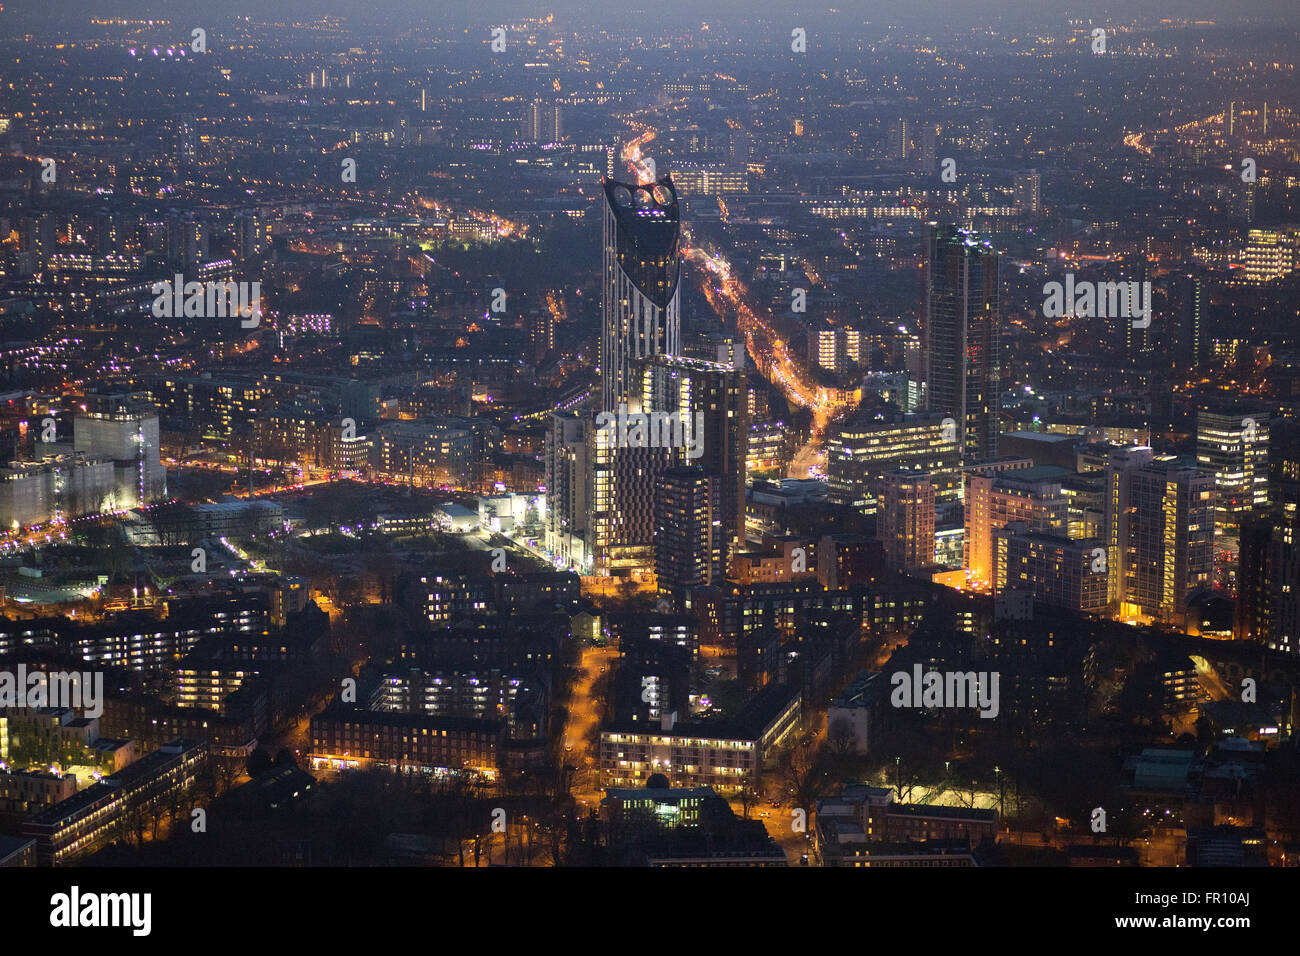 Elephant & Castle Station, night aerial view, London,UK Stock Photo